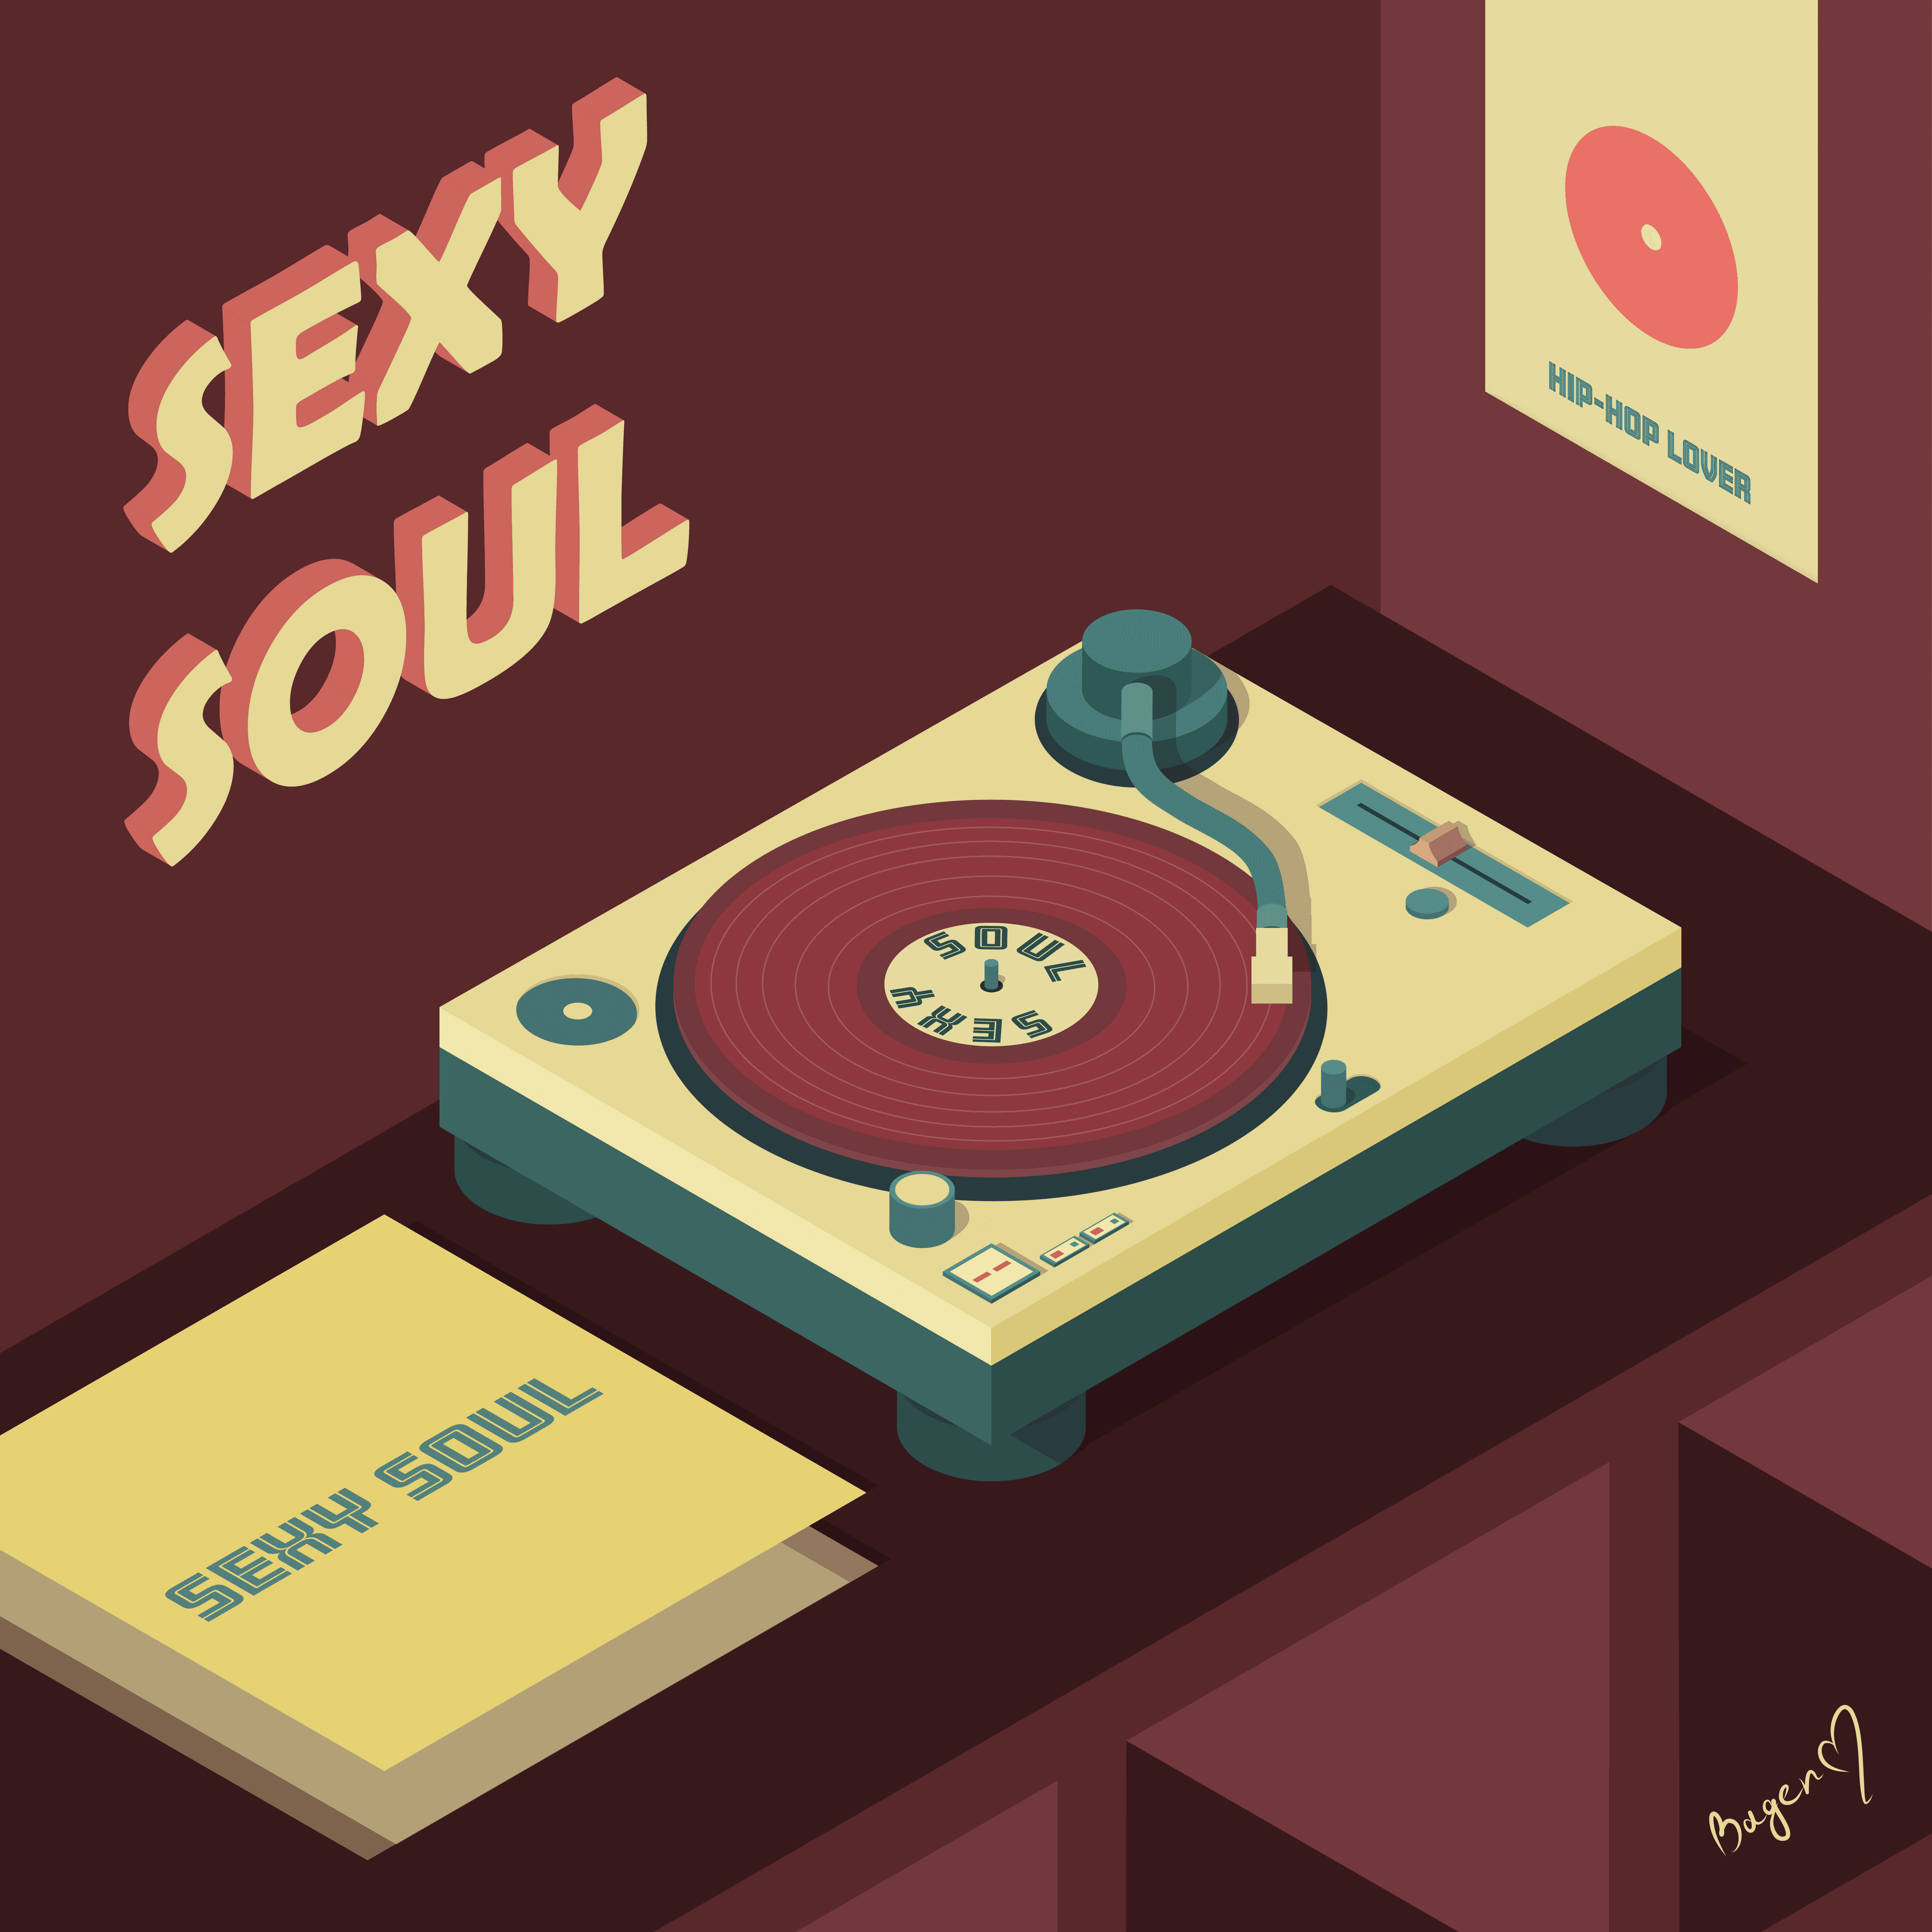 Sexy Soul